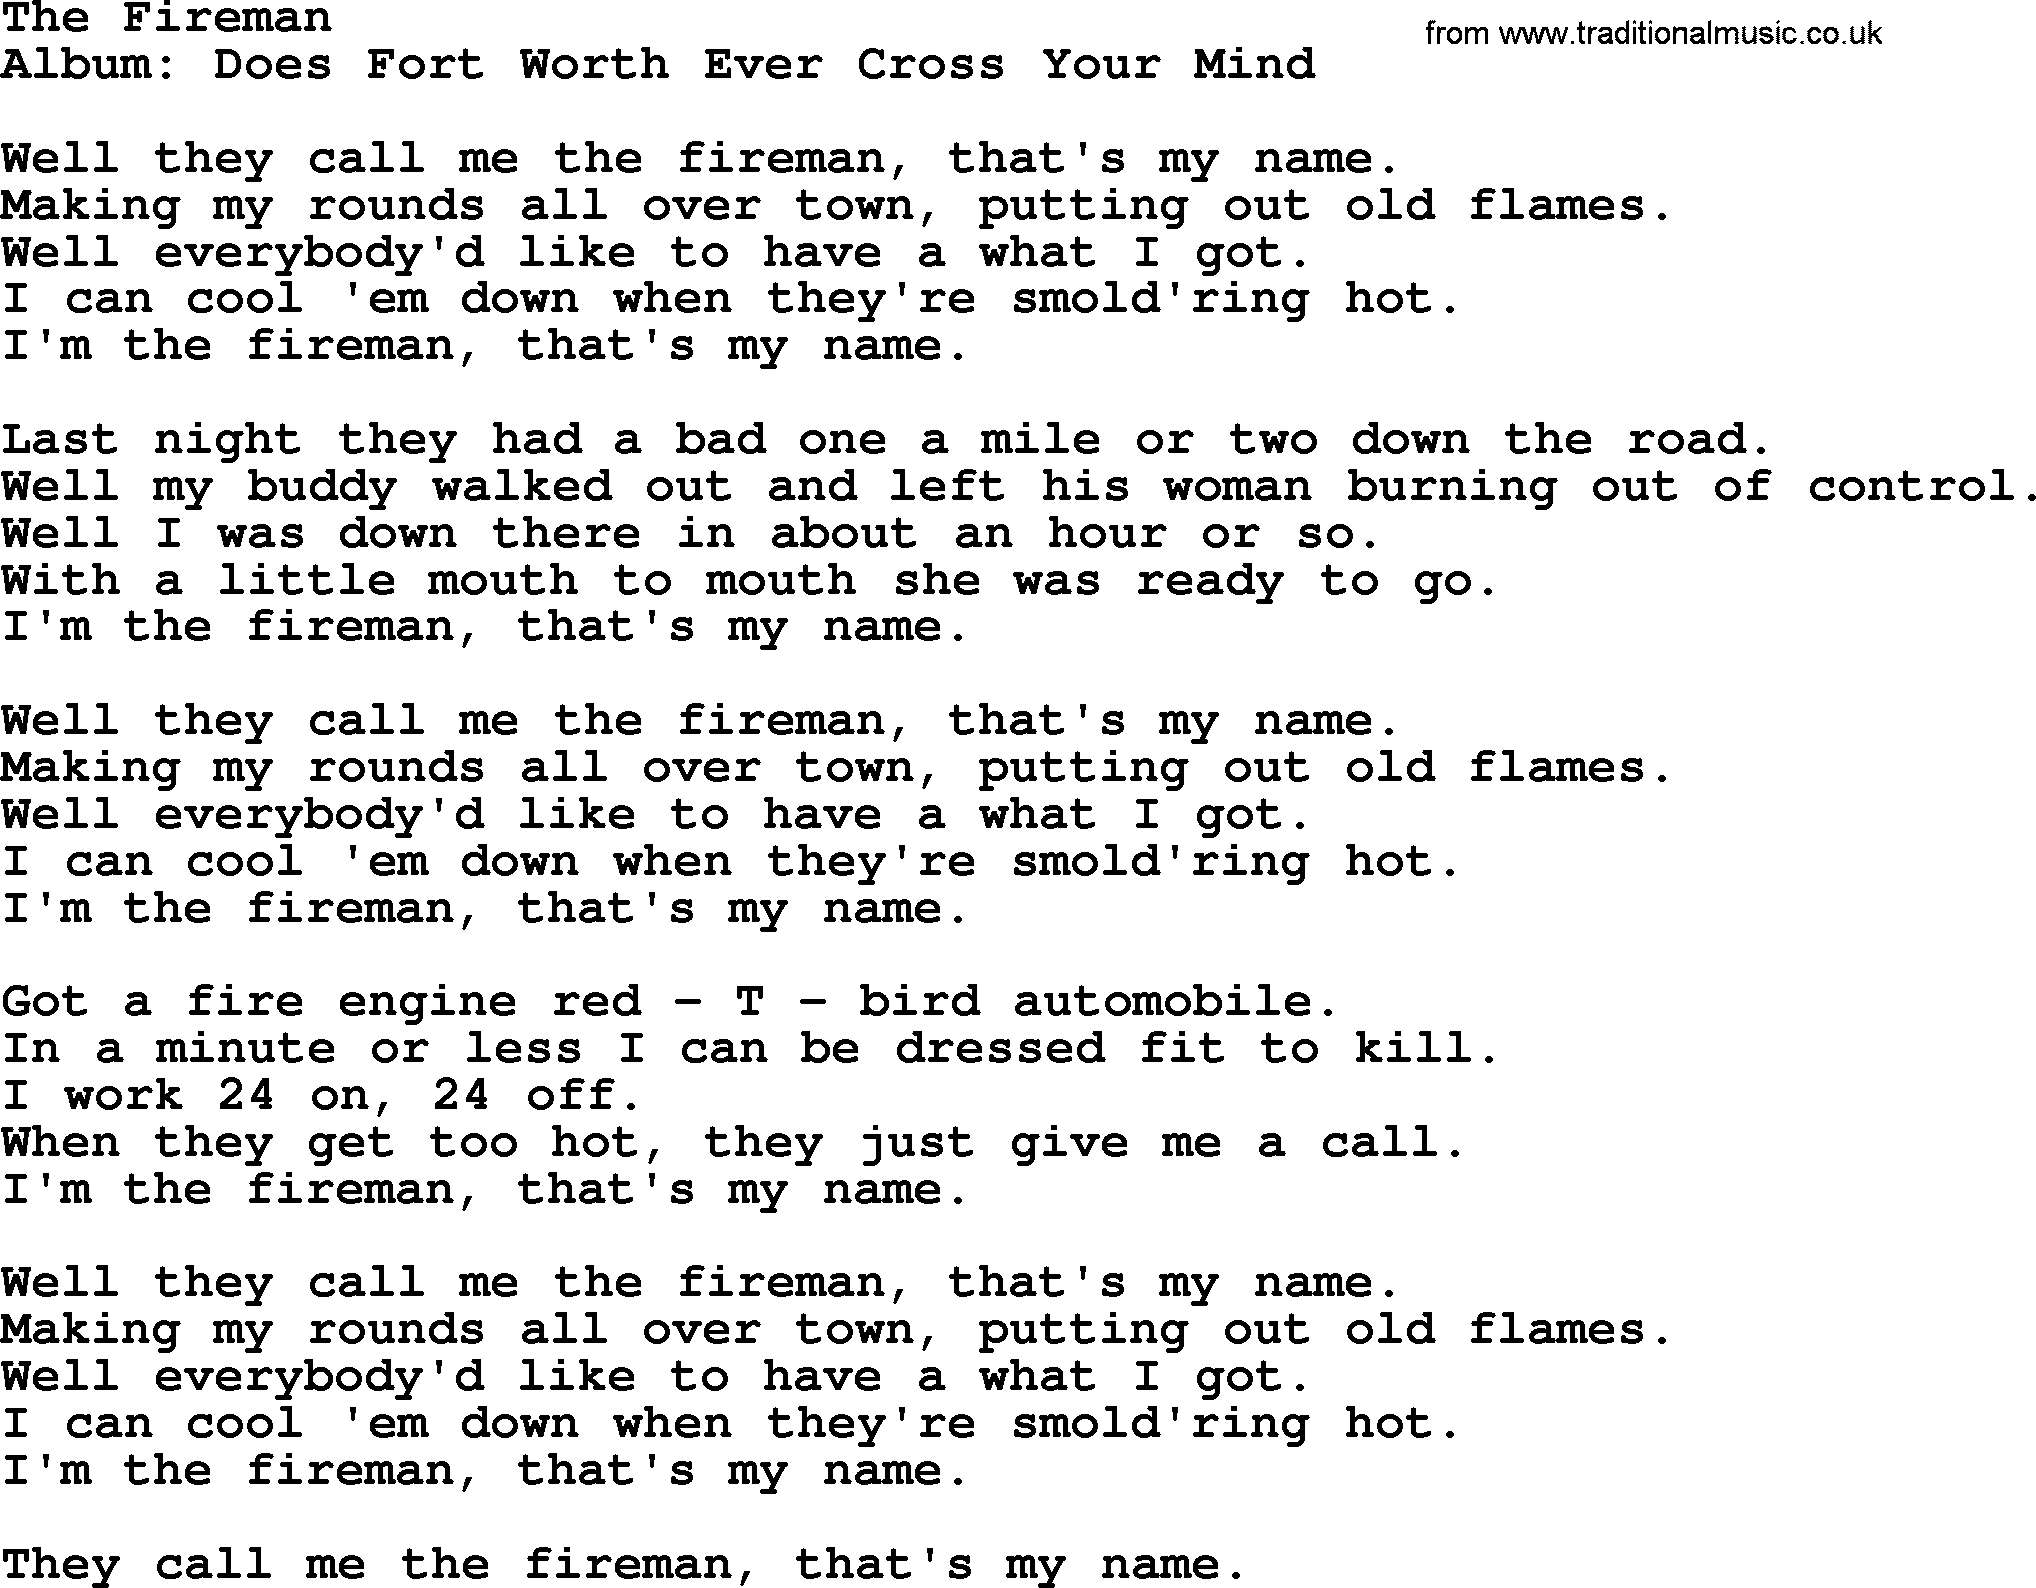 George Strait song: The Fireman, lyrics